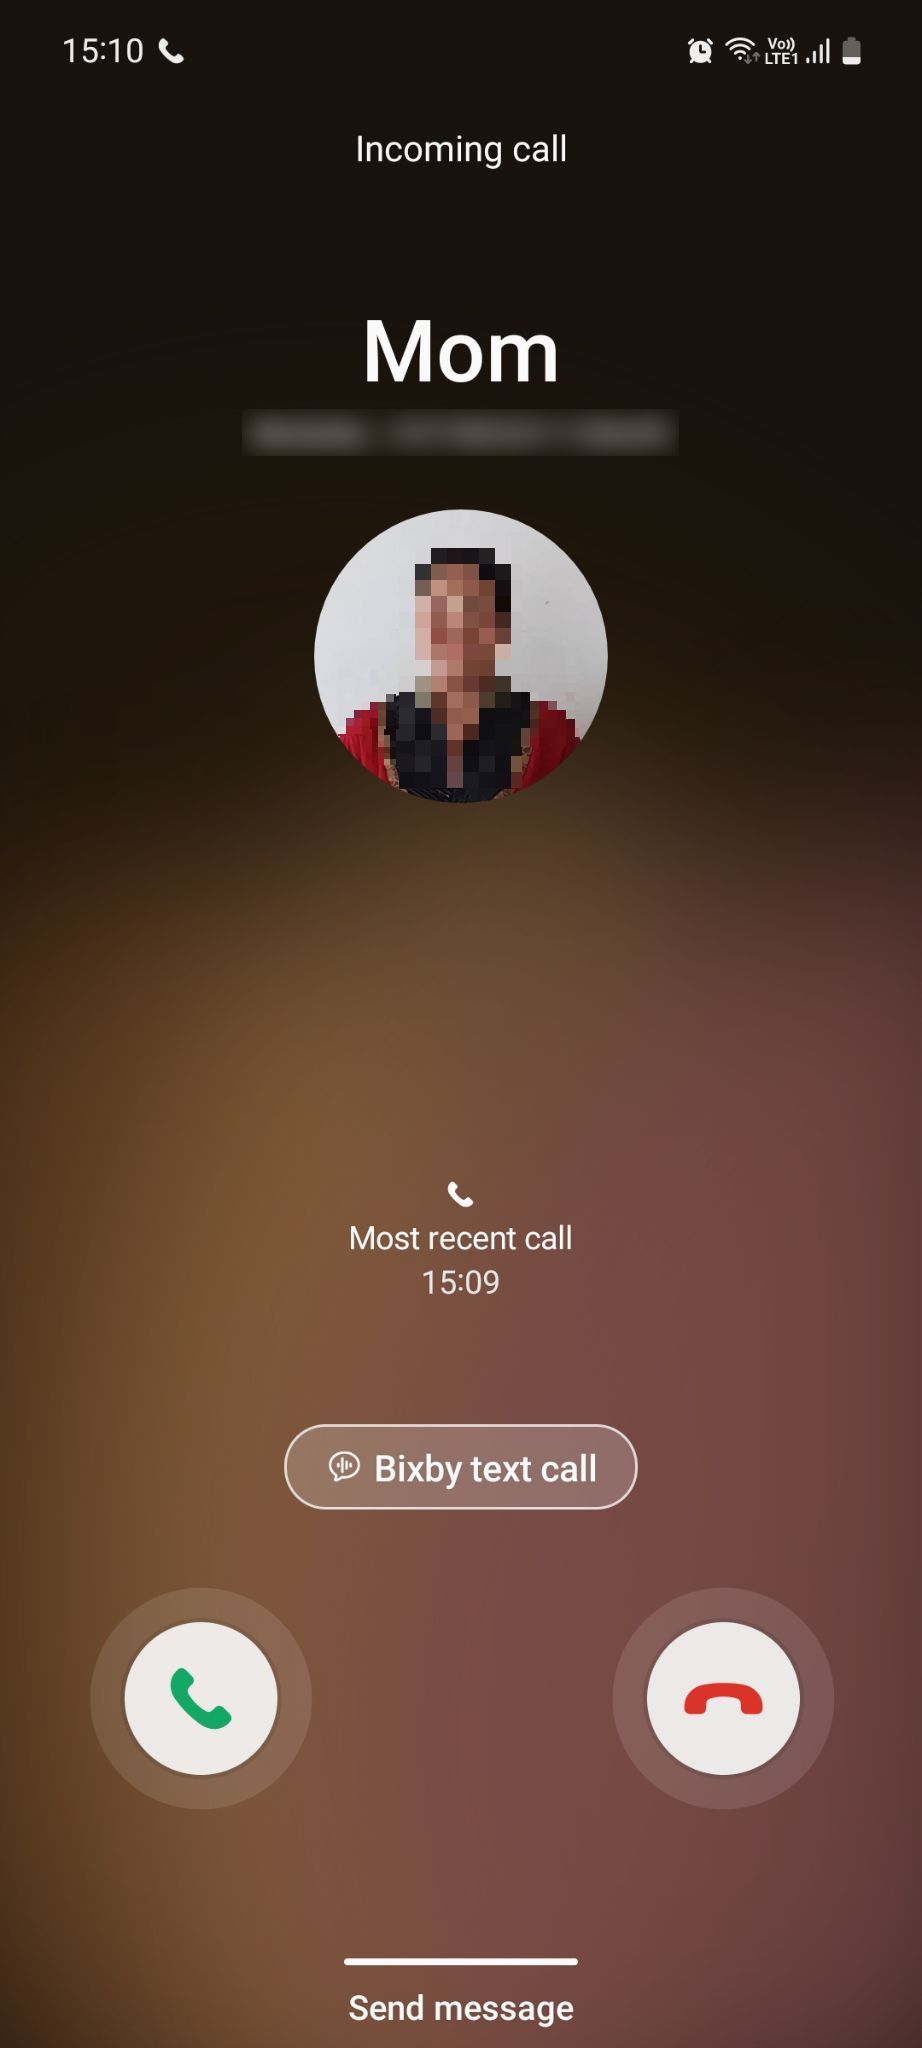 Samsung Call Screen with Bixby Text Call button